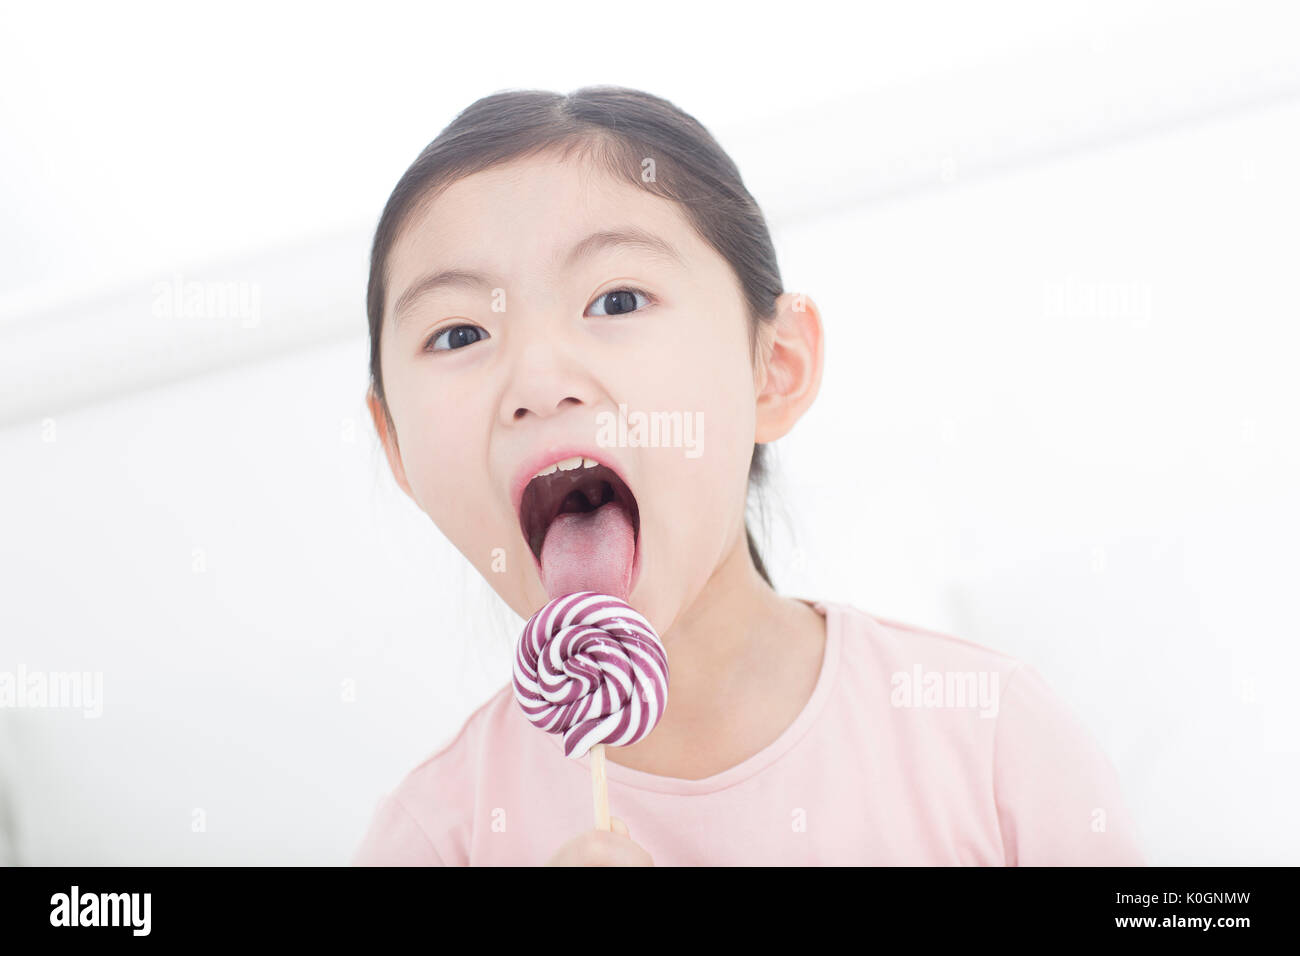 Portrait of smiling girl licking lollipop Stock Photo